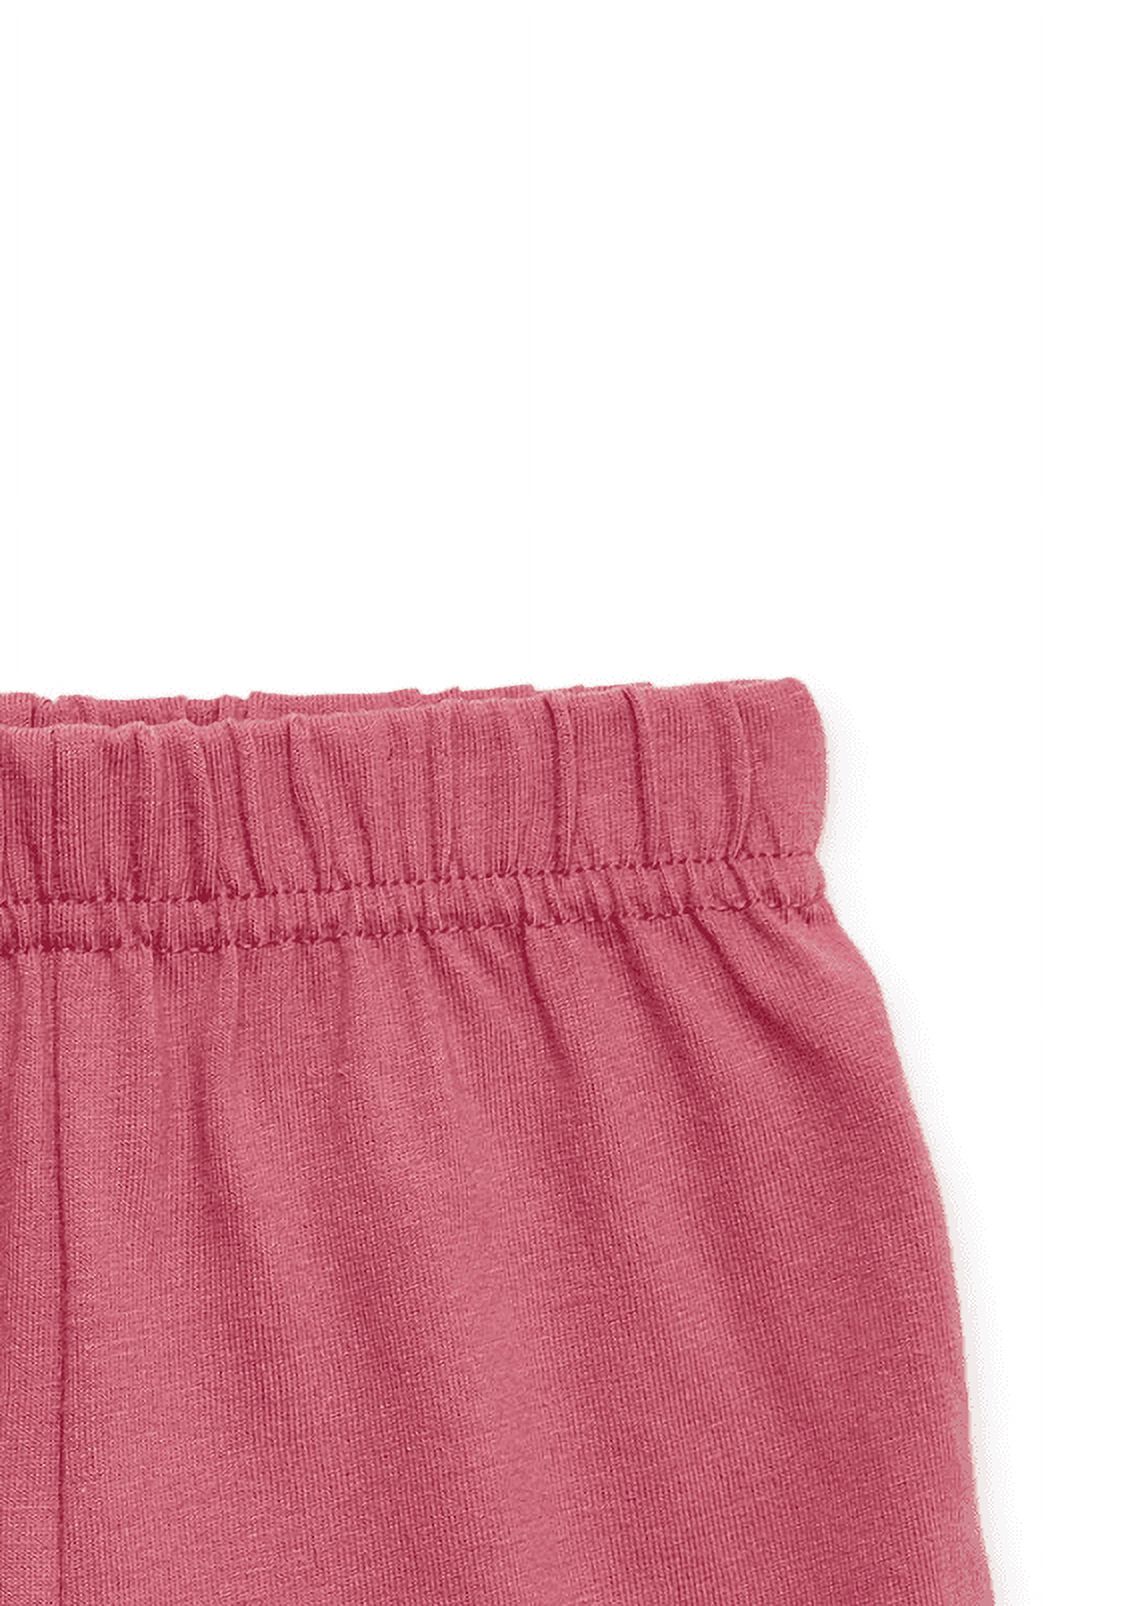 Garanimals Baby and Toddler Girls Jersey Shorts, Sizes 12M-5T - image 2 of 4